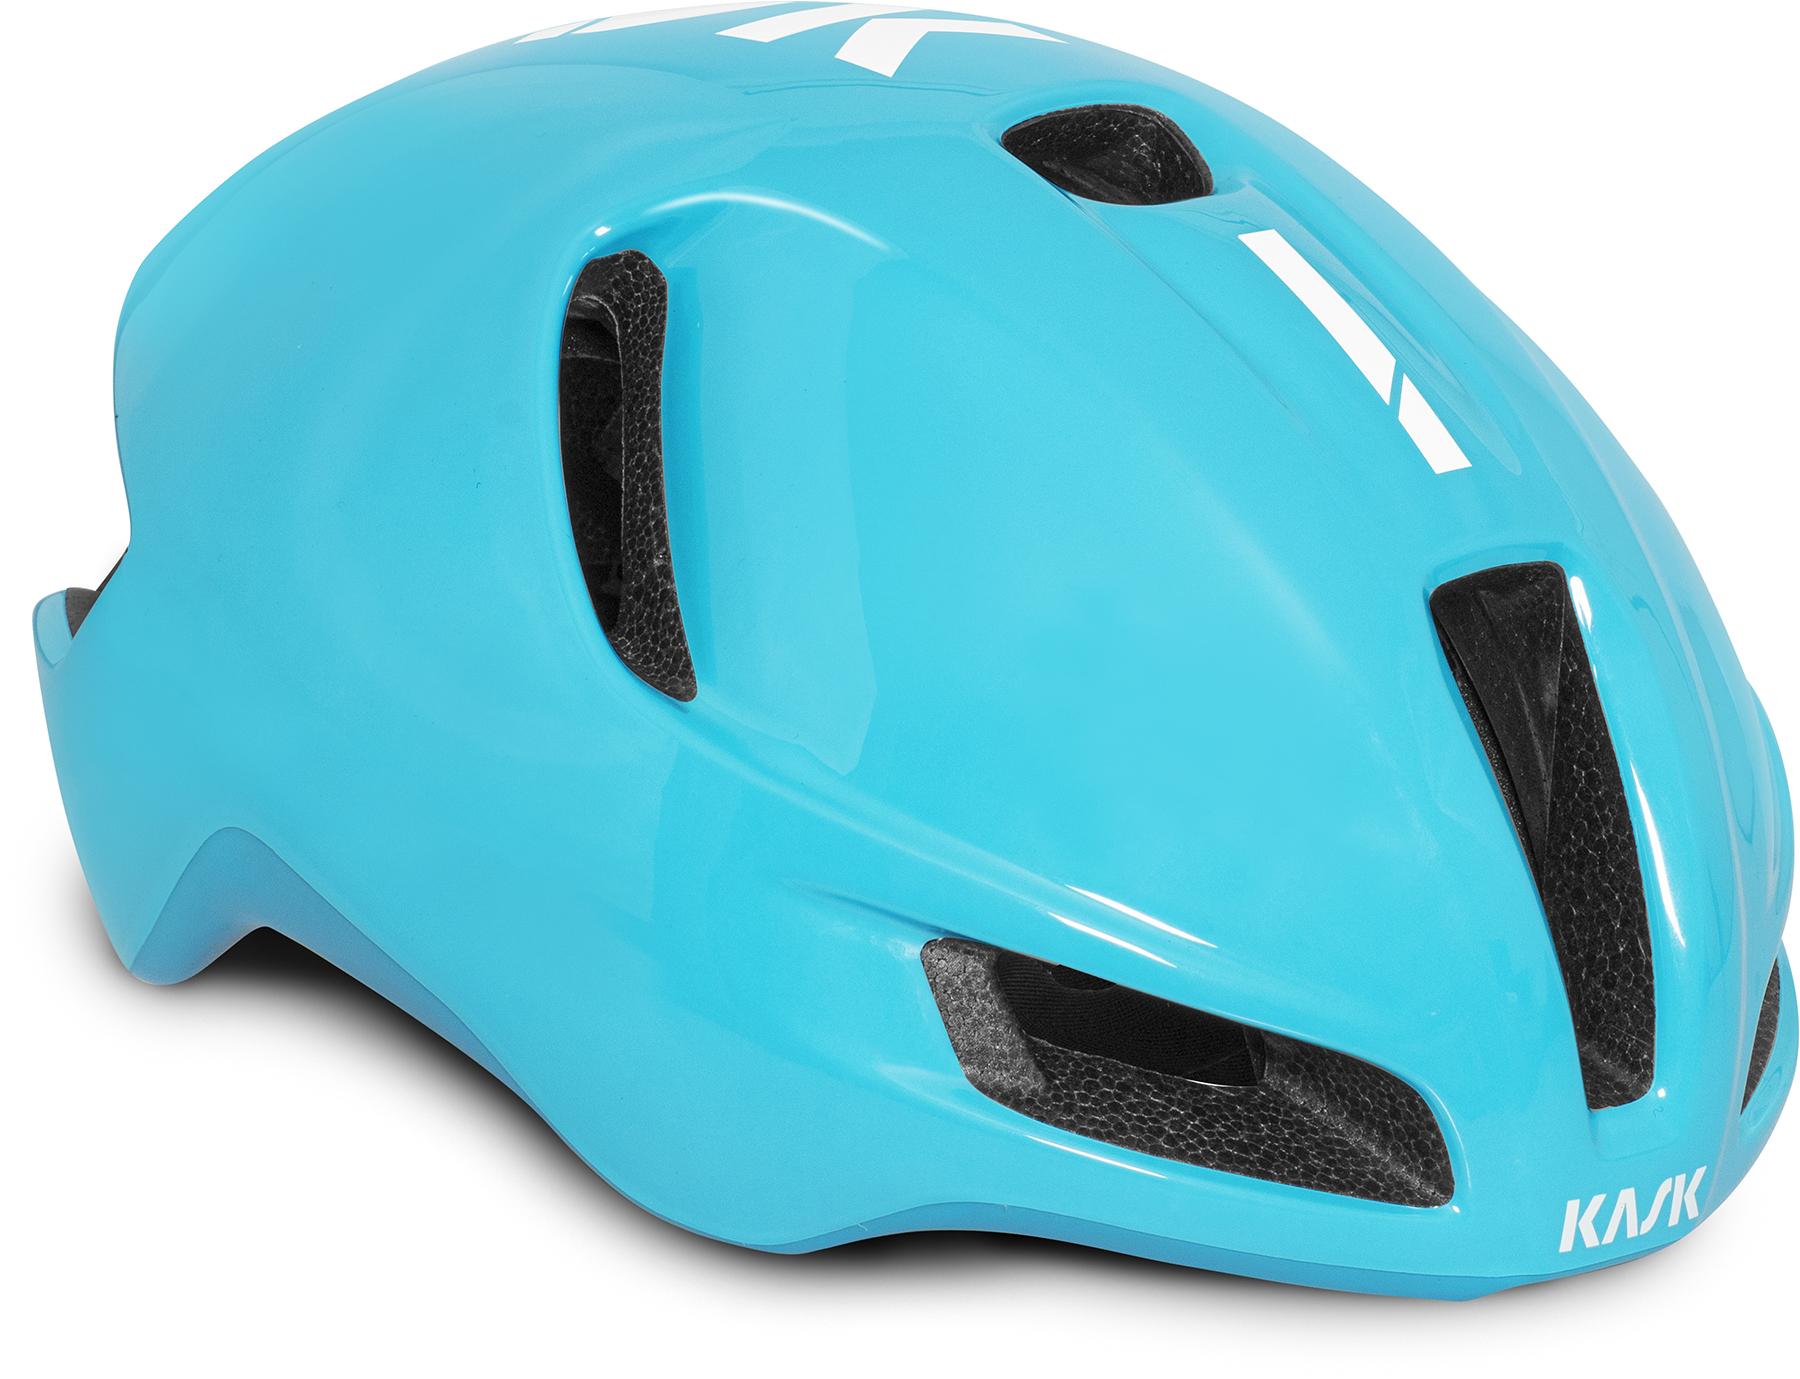 Kask Utopia Road Cycling Helmet (wg11) - Light Blue/black